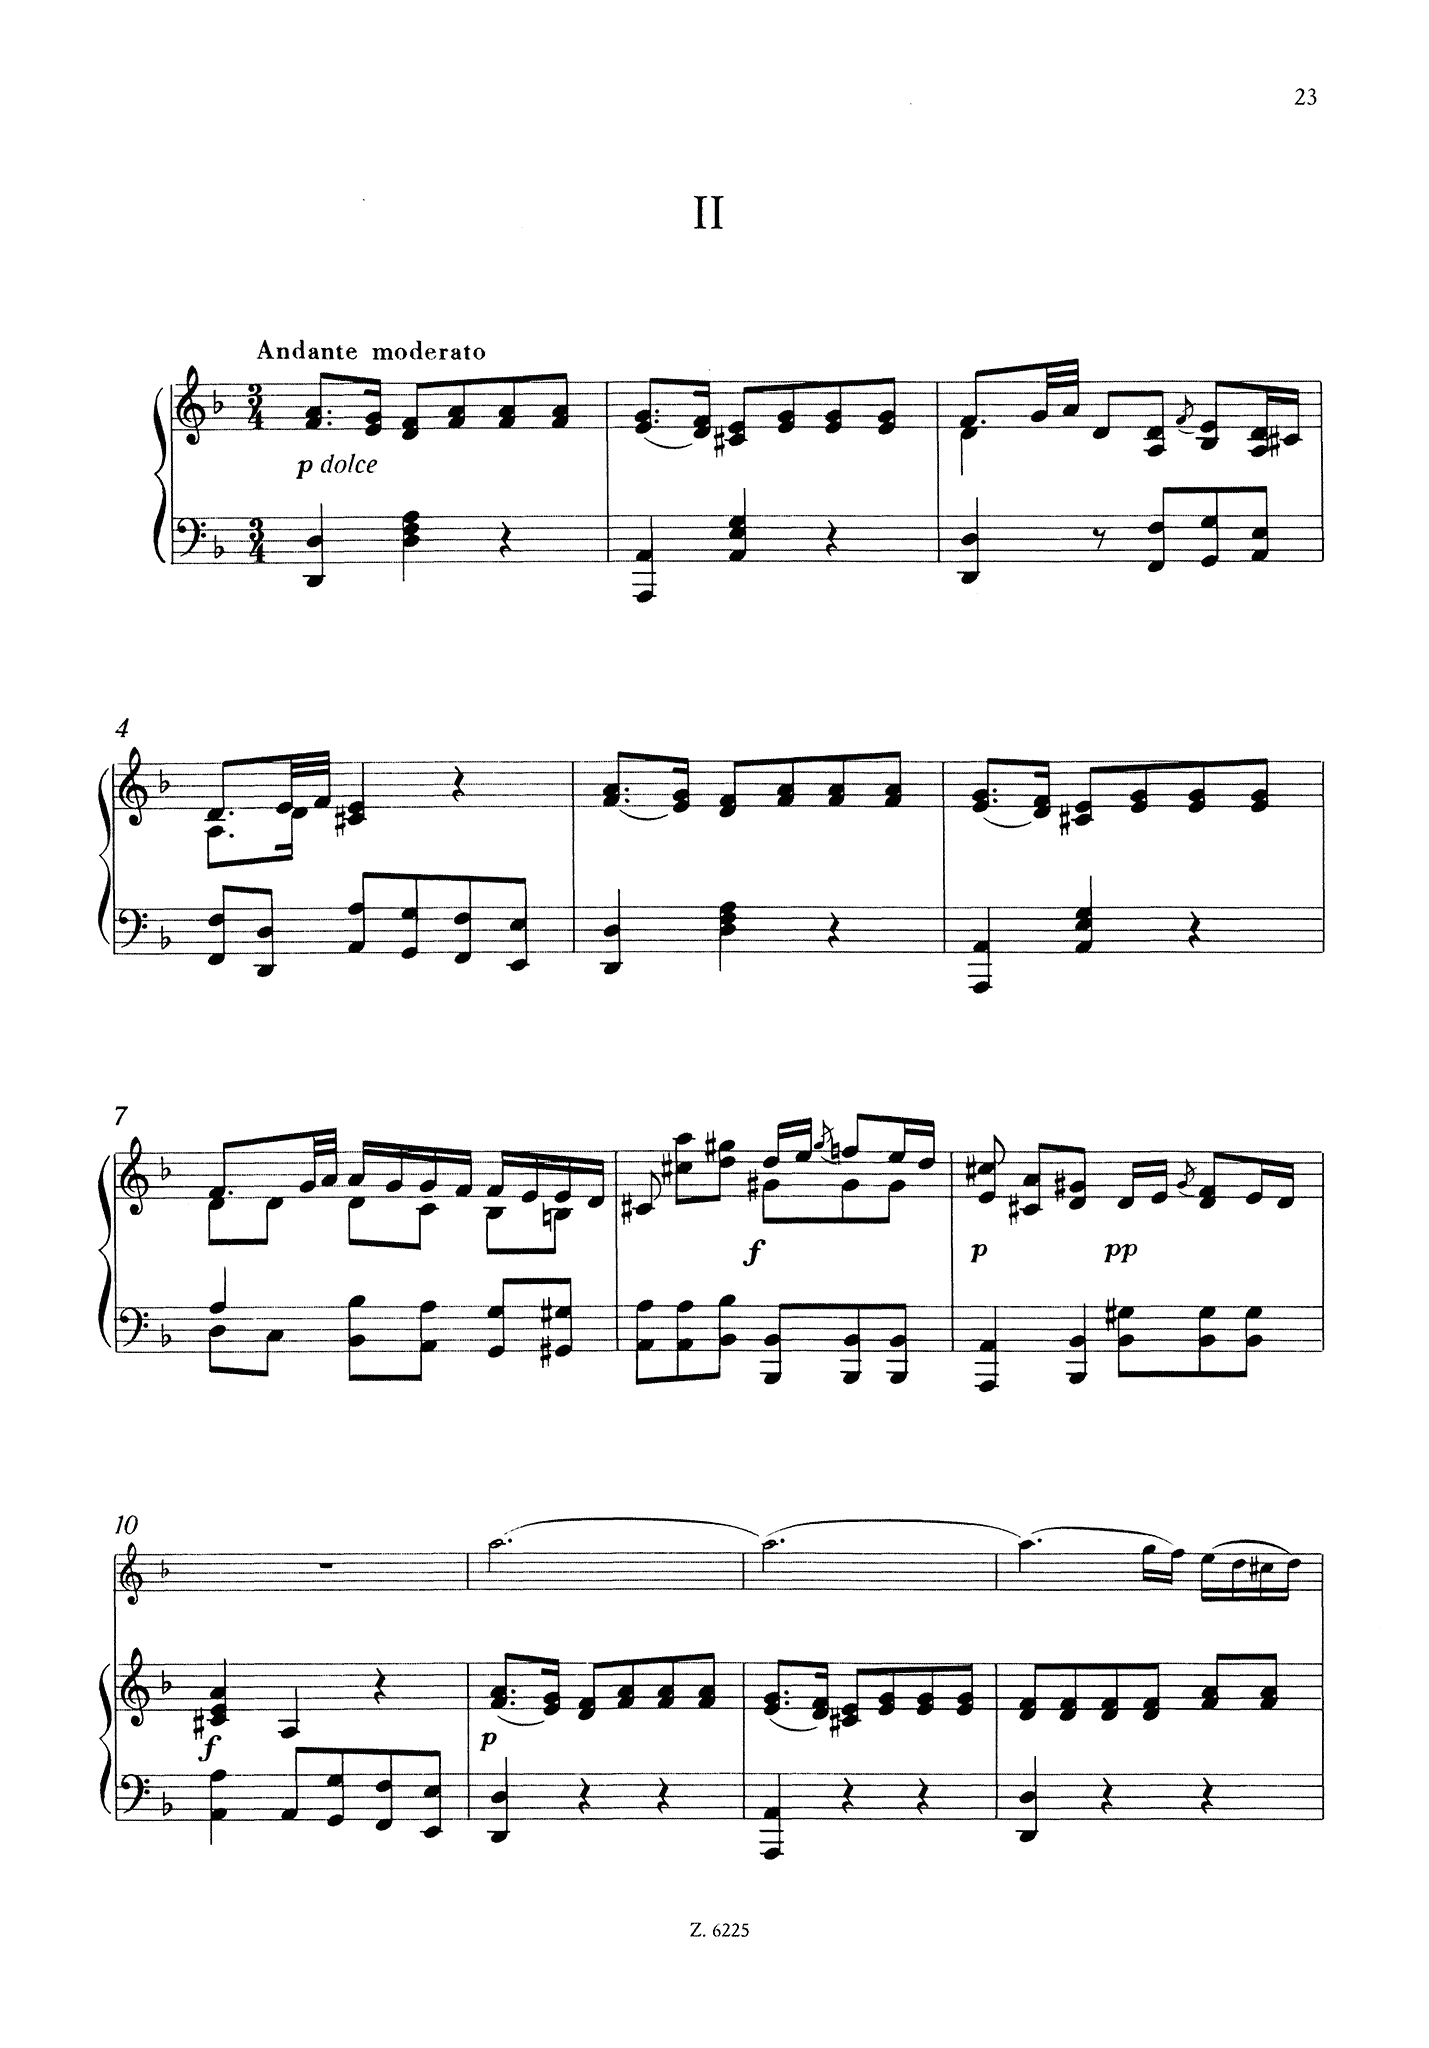 Clarinet Concerto No. 1 (Kaiser) in F Major - Movement 2